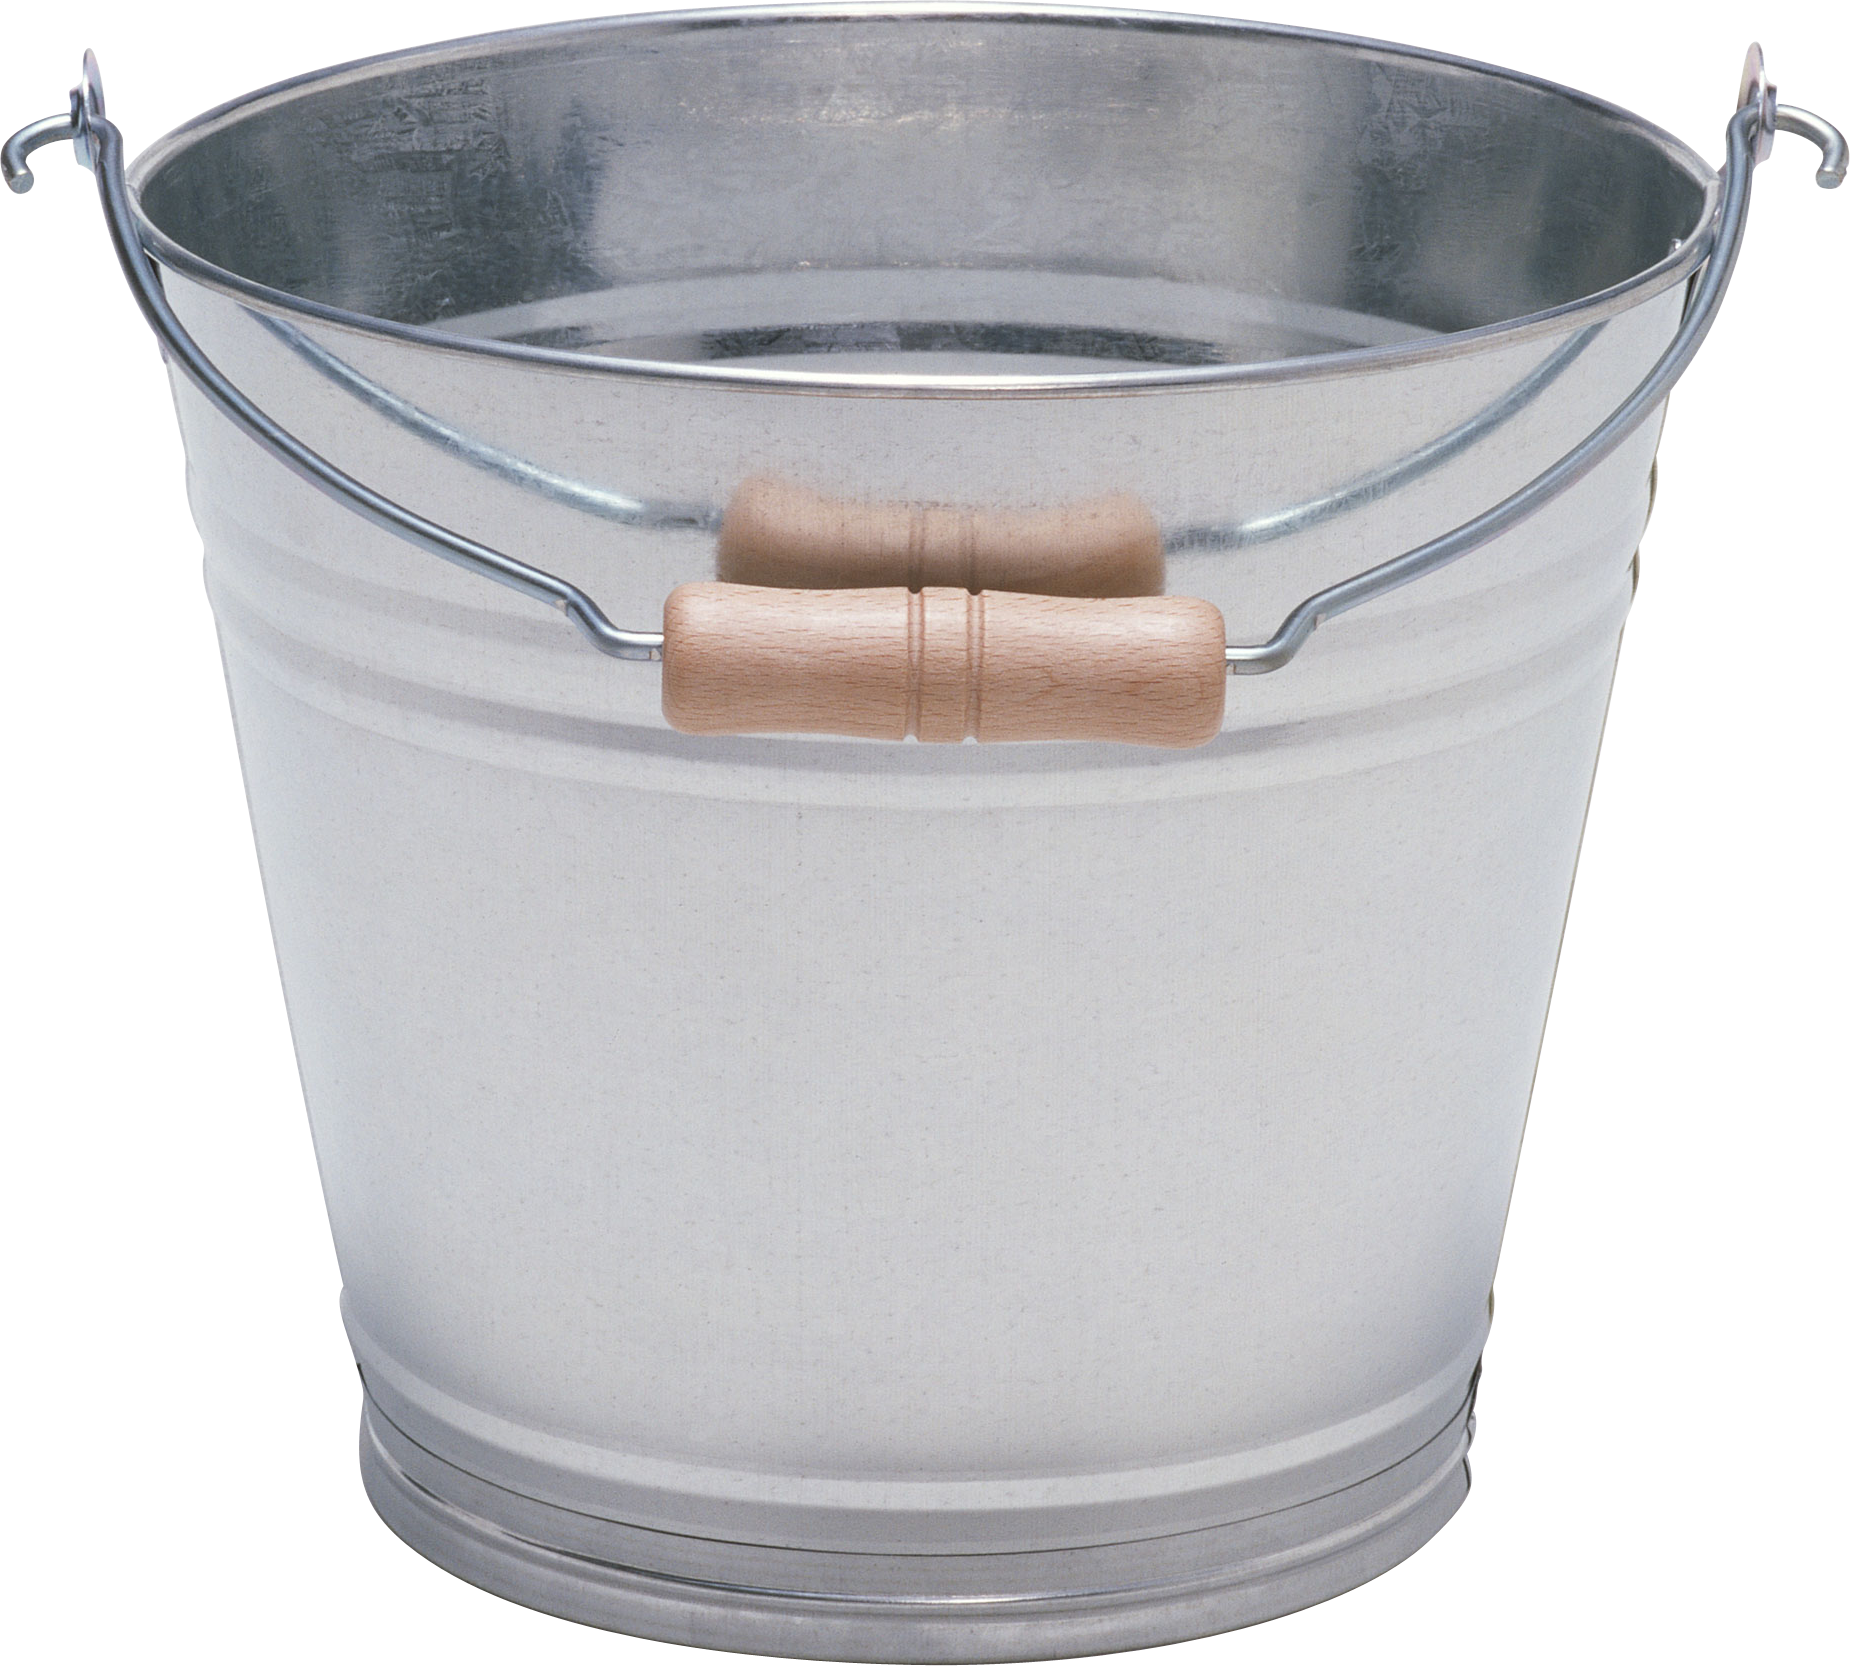 tub clipart wooden bucket